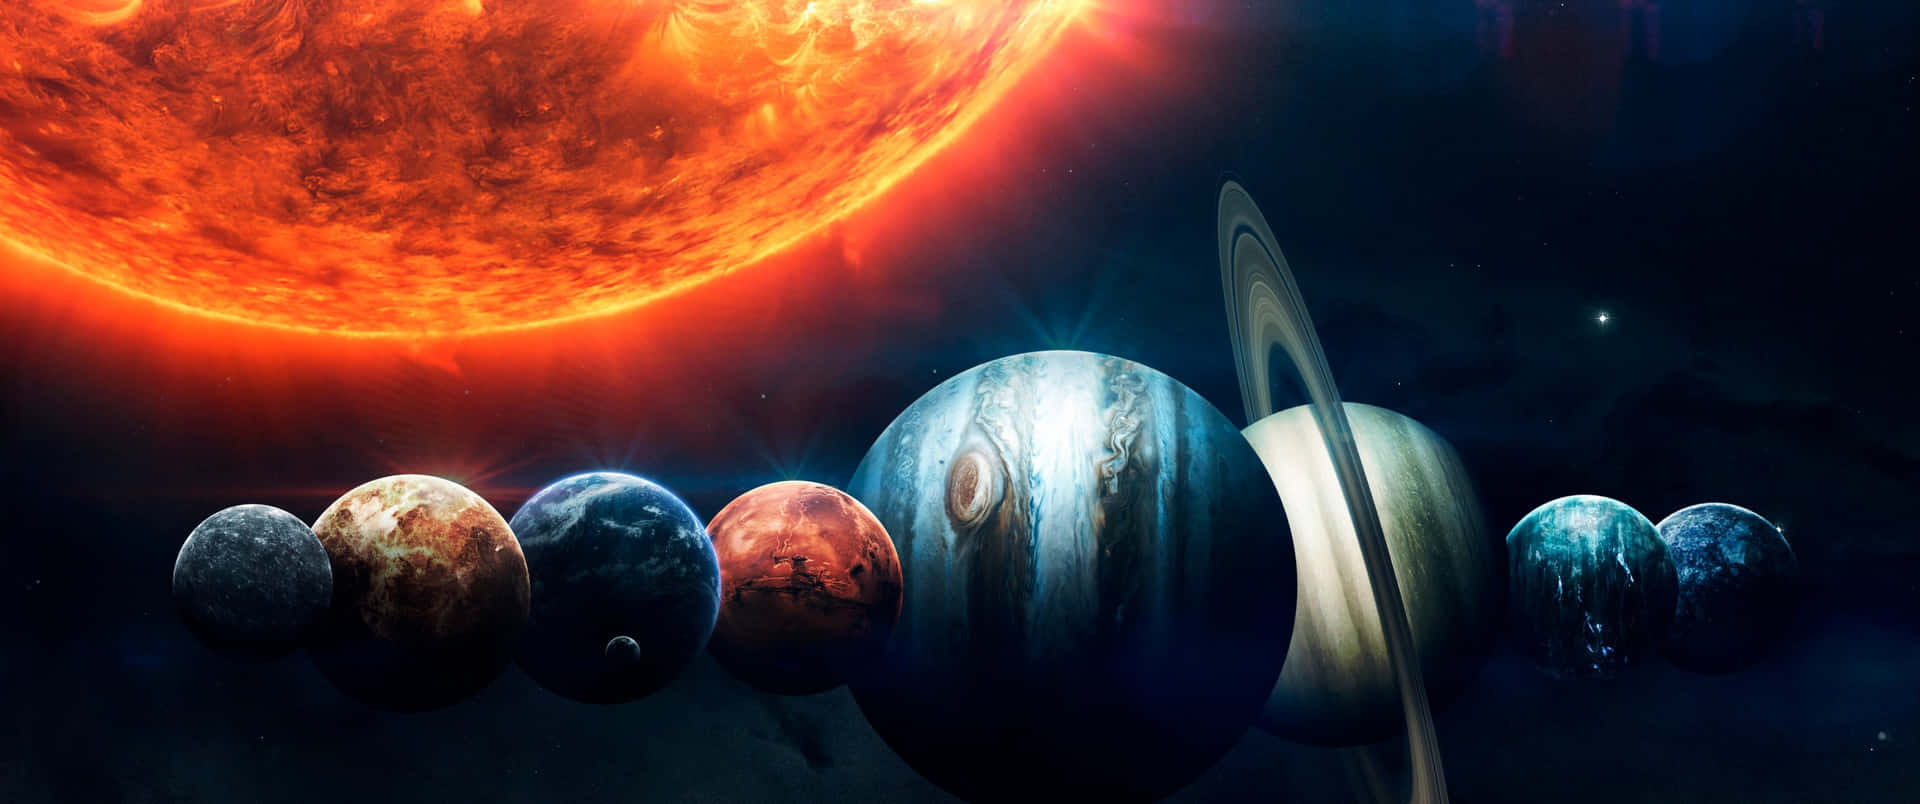 Solar System Planets Facing Sun Wallpaper